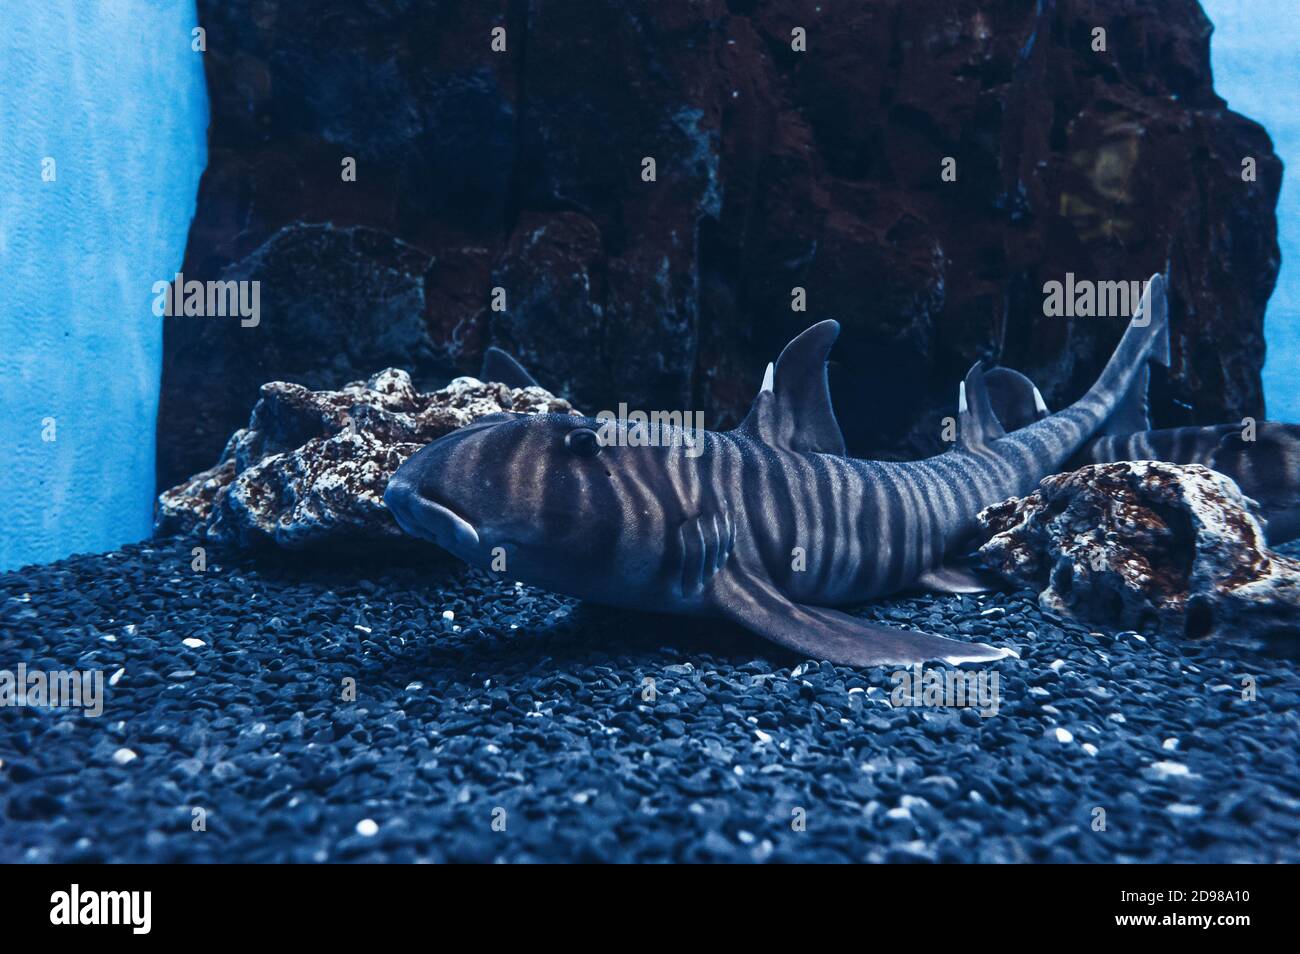 close up view of lying on the bottom between rocks  zebra bullhead shark Stock Photo